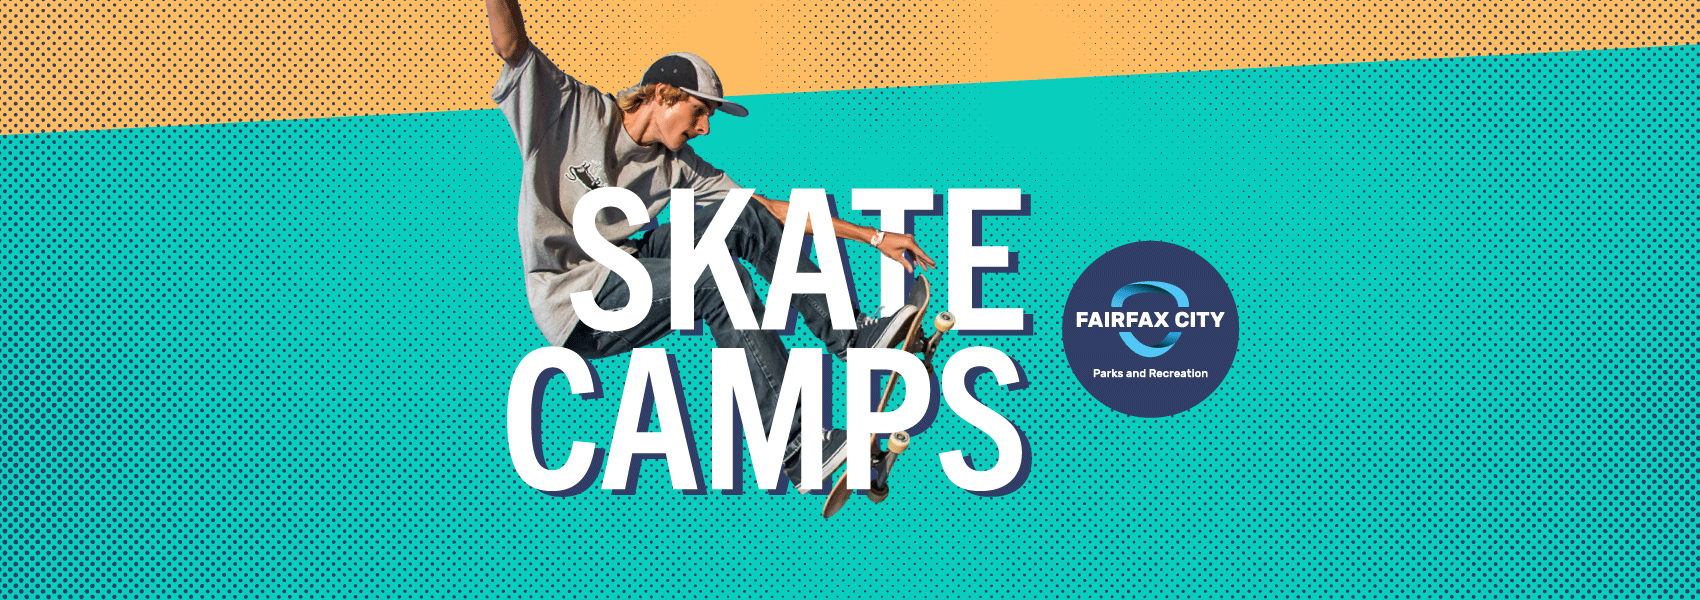 Fairfax City Skate Camp